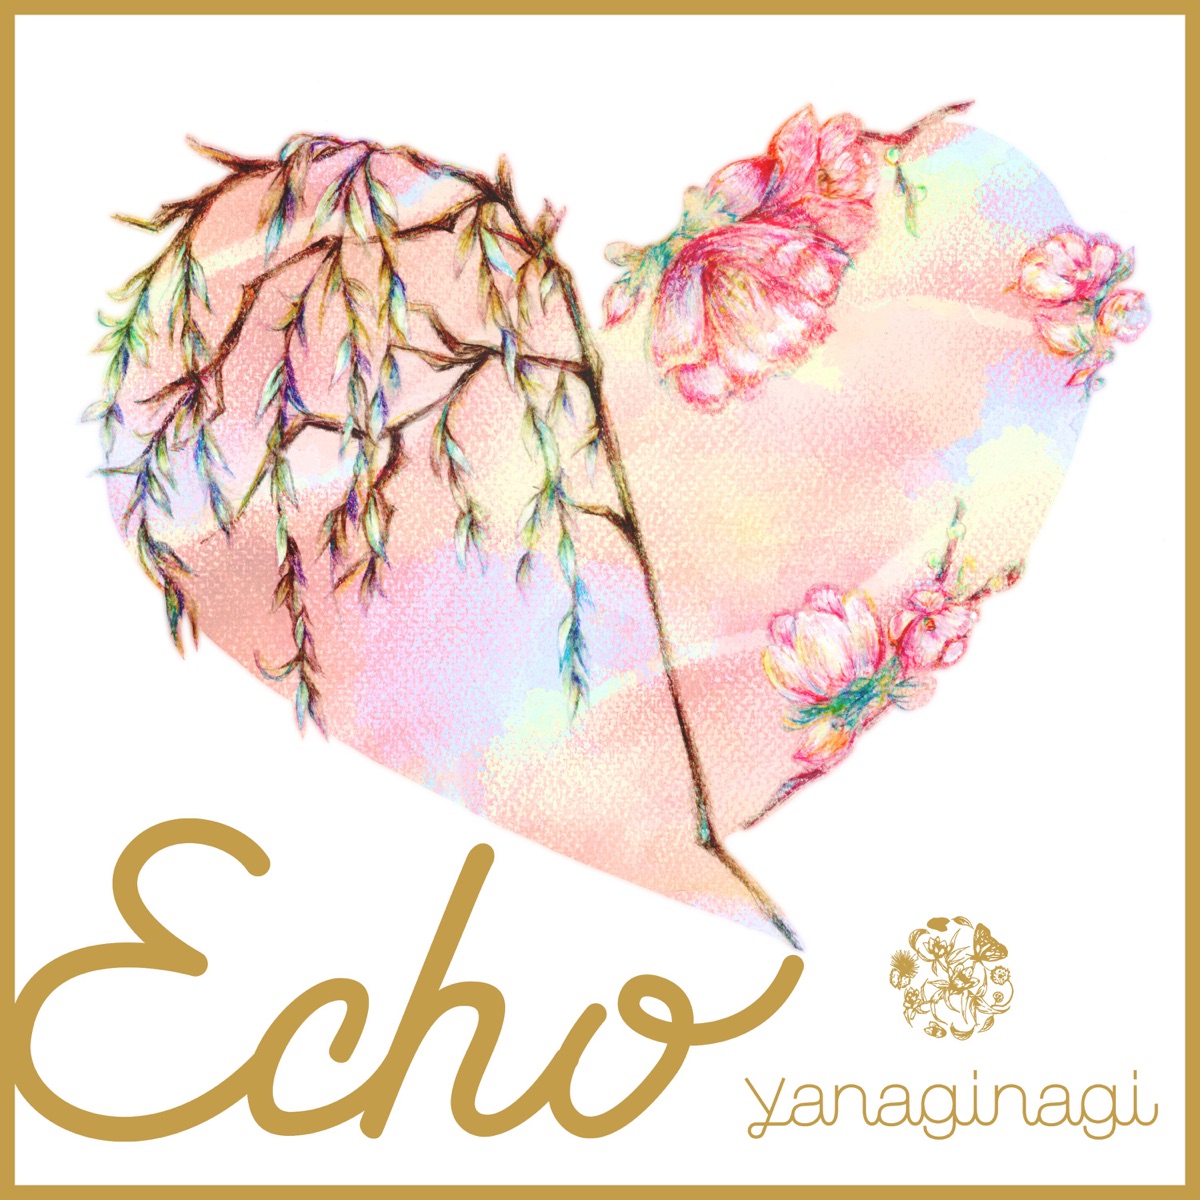 Cover art for『yanaginagi - Echo』from the release『Echo